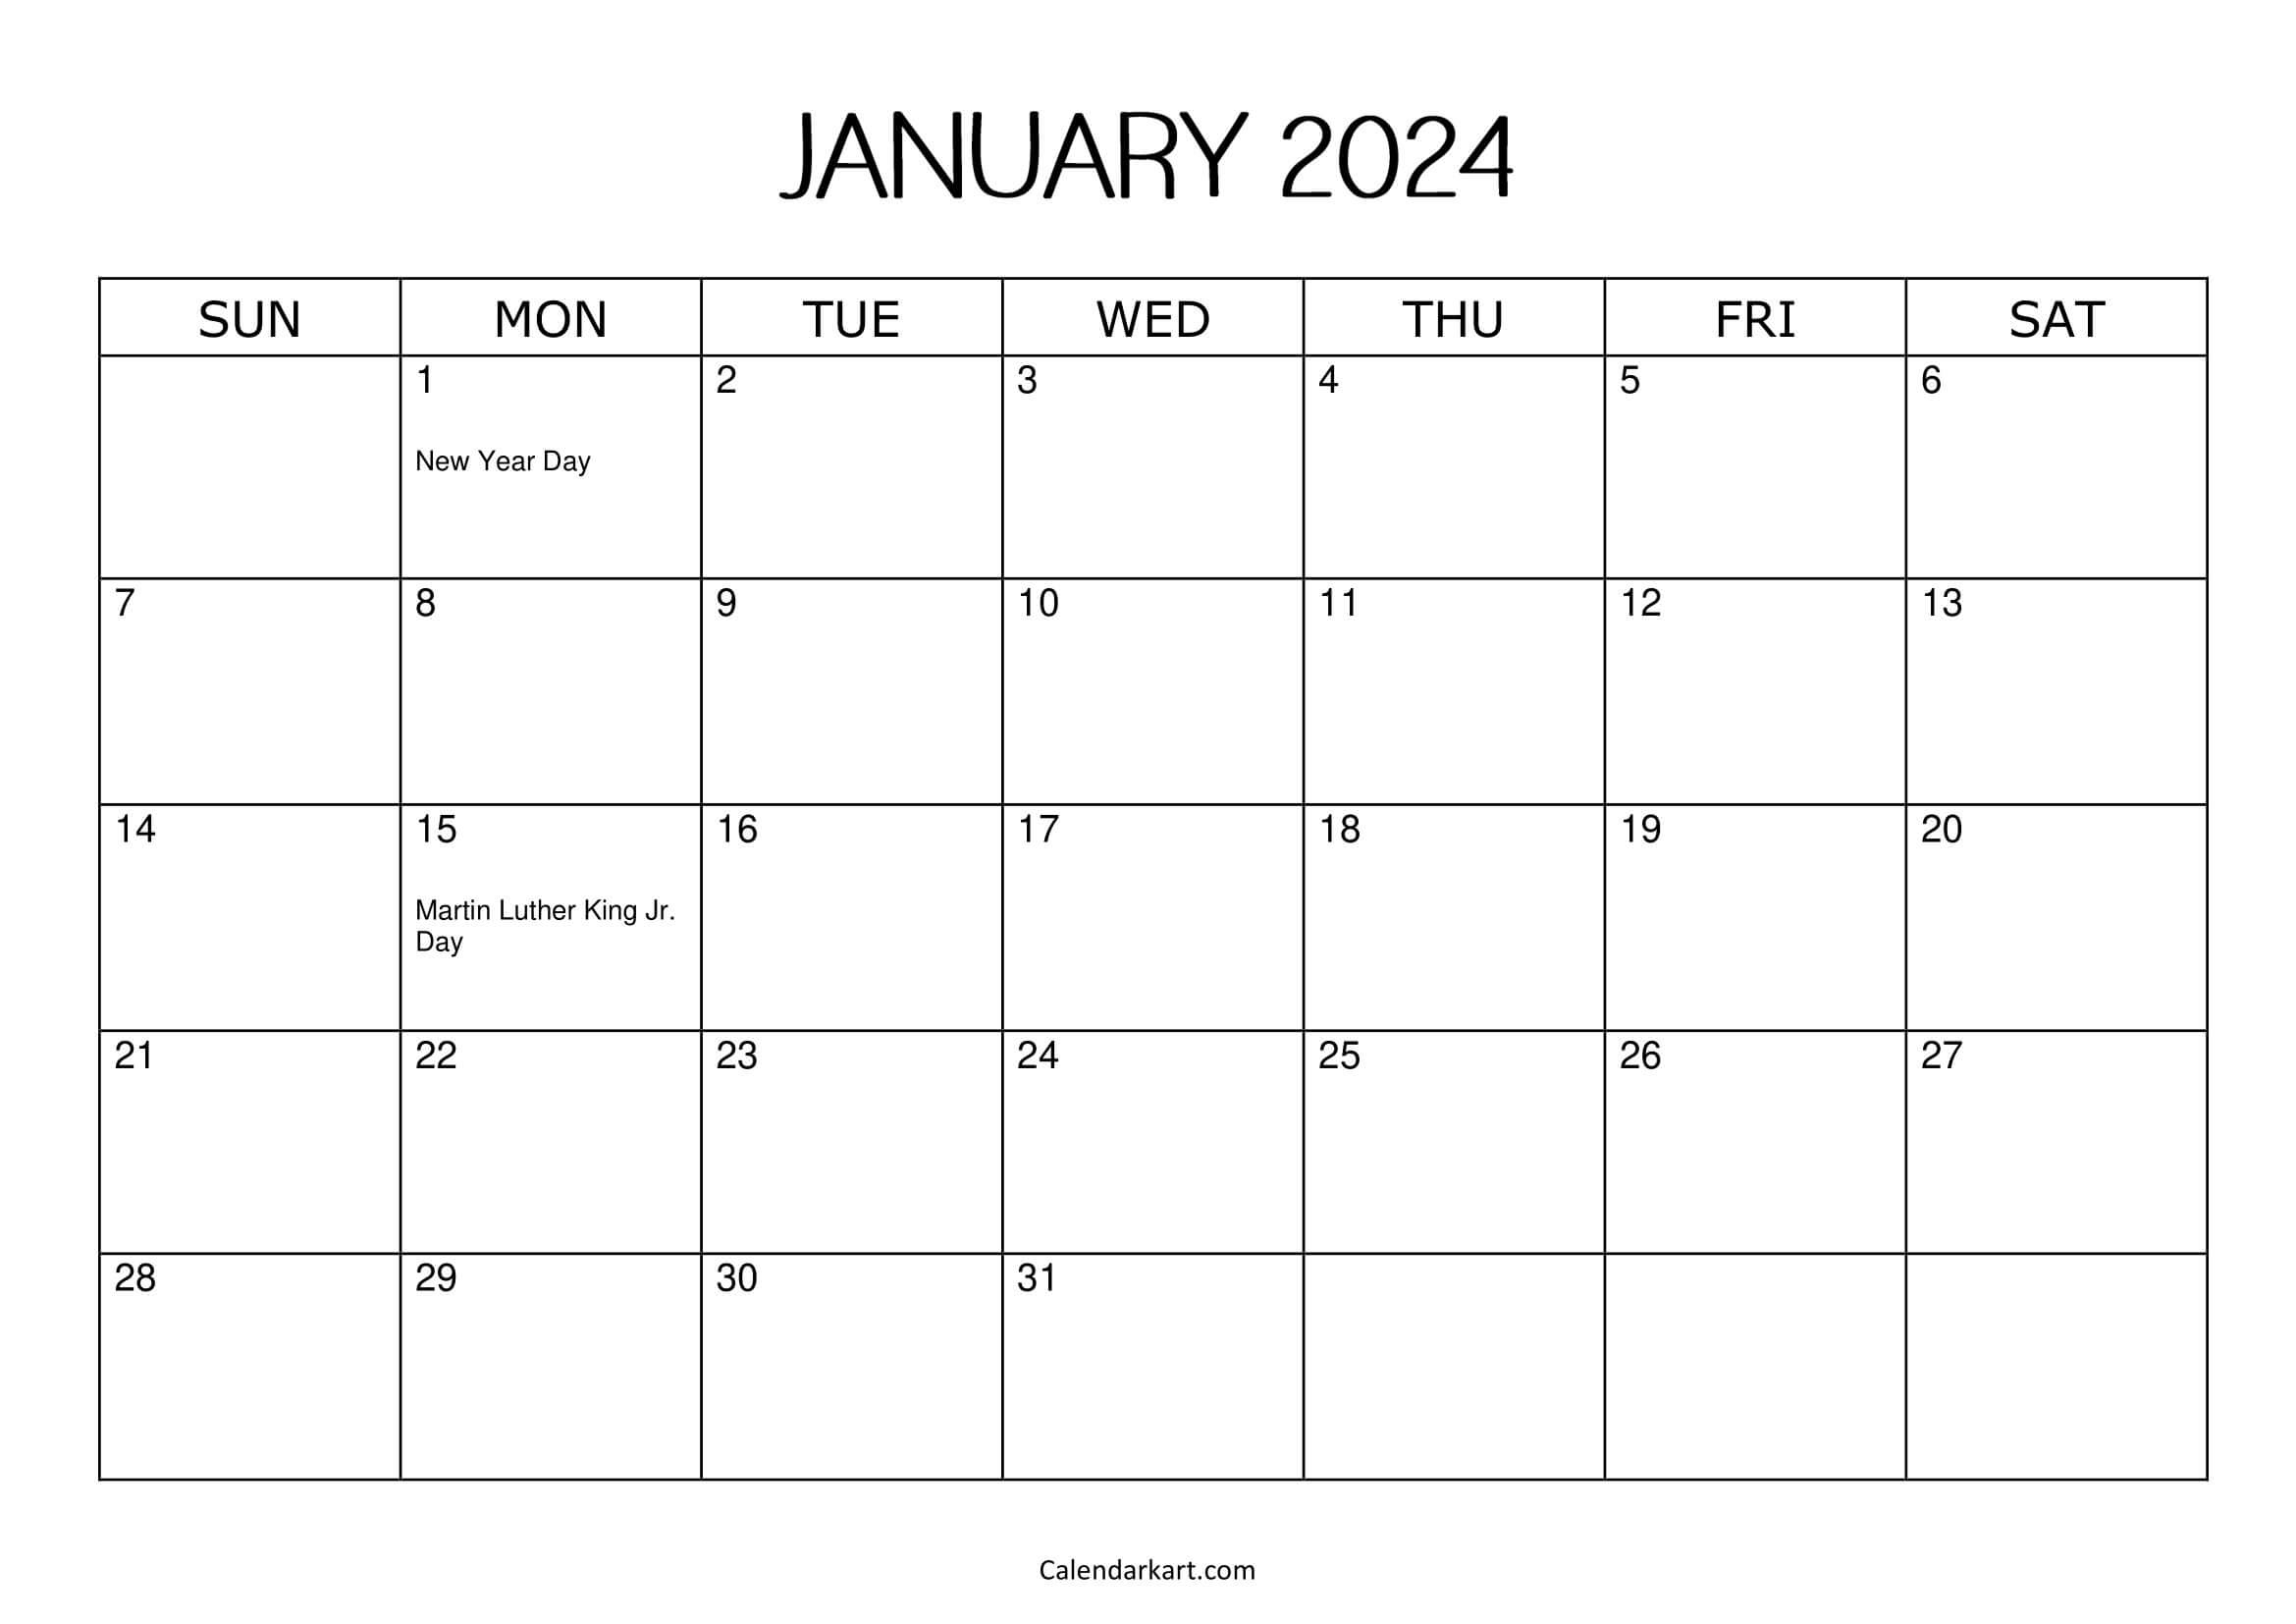 Free Printable January 2024 Calendars - Calendarkart | Printable 2024 Monthly Calendar With Holidays